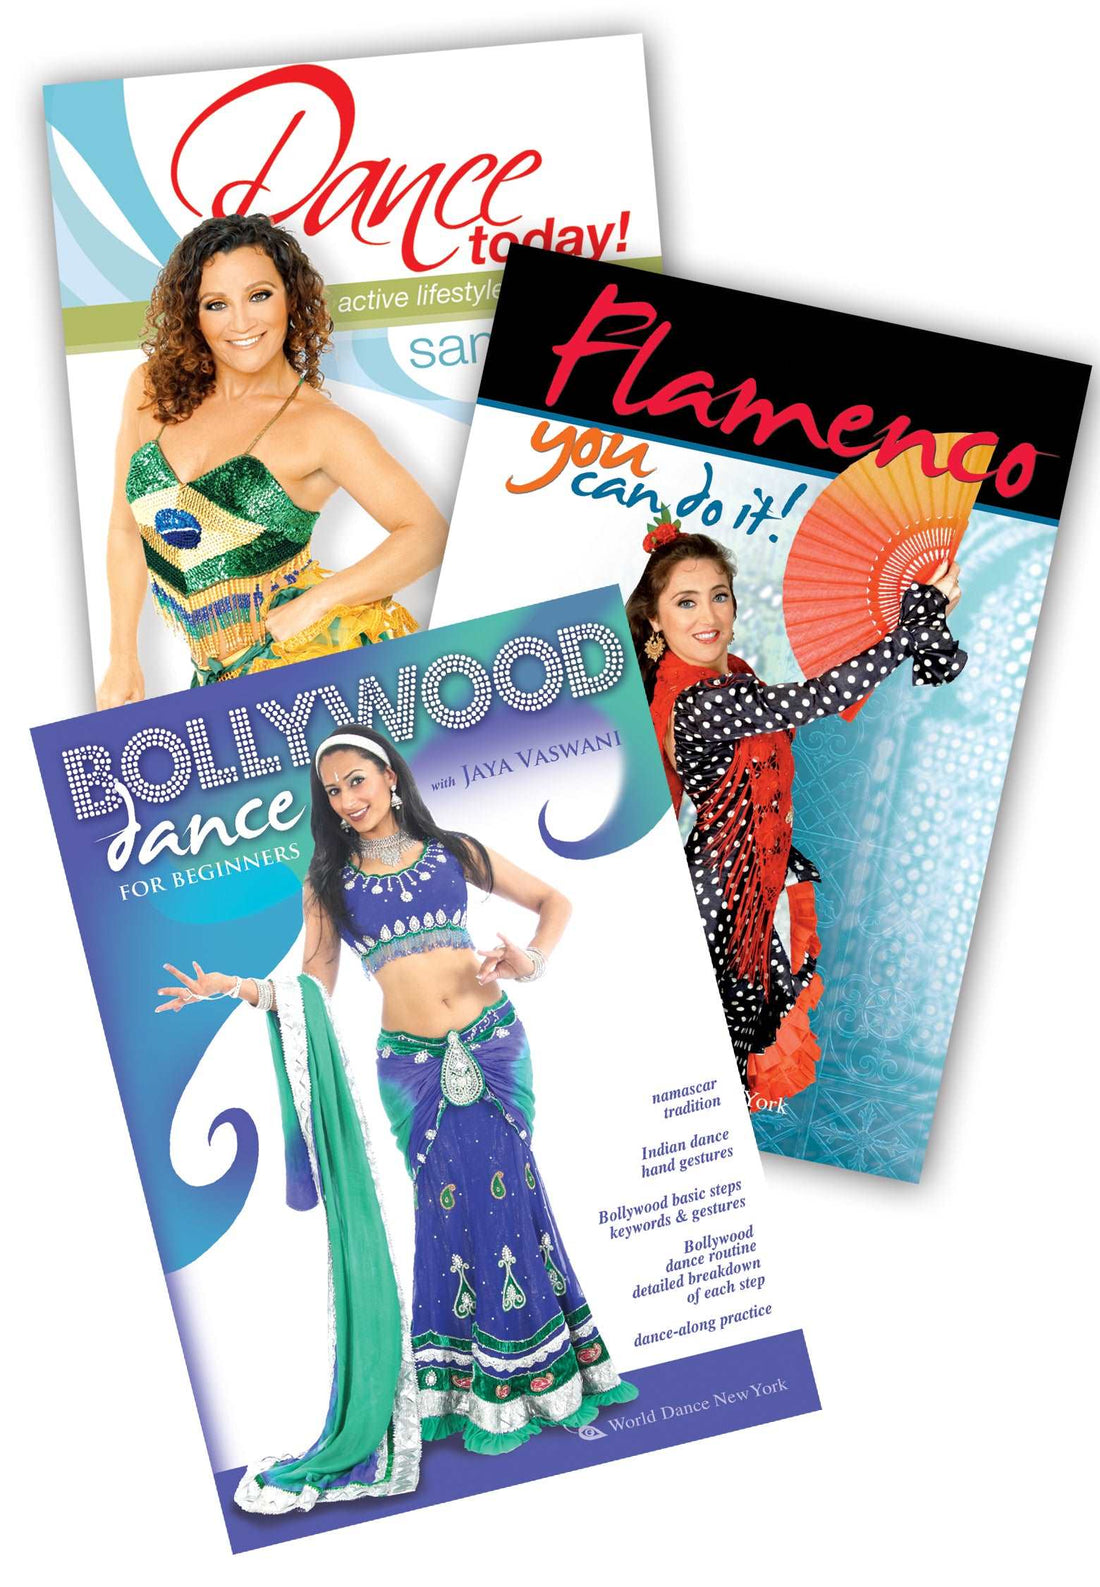 Expand your dance horizons - Bollywood, Flamenco, Samba 3-DVD Set - World Dance New York